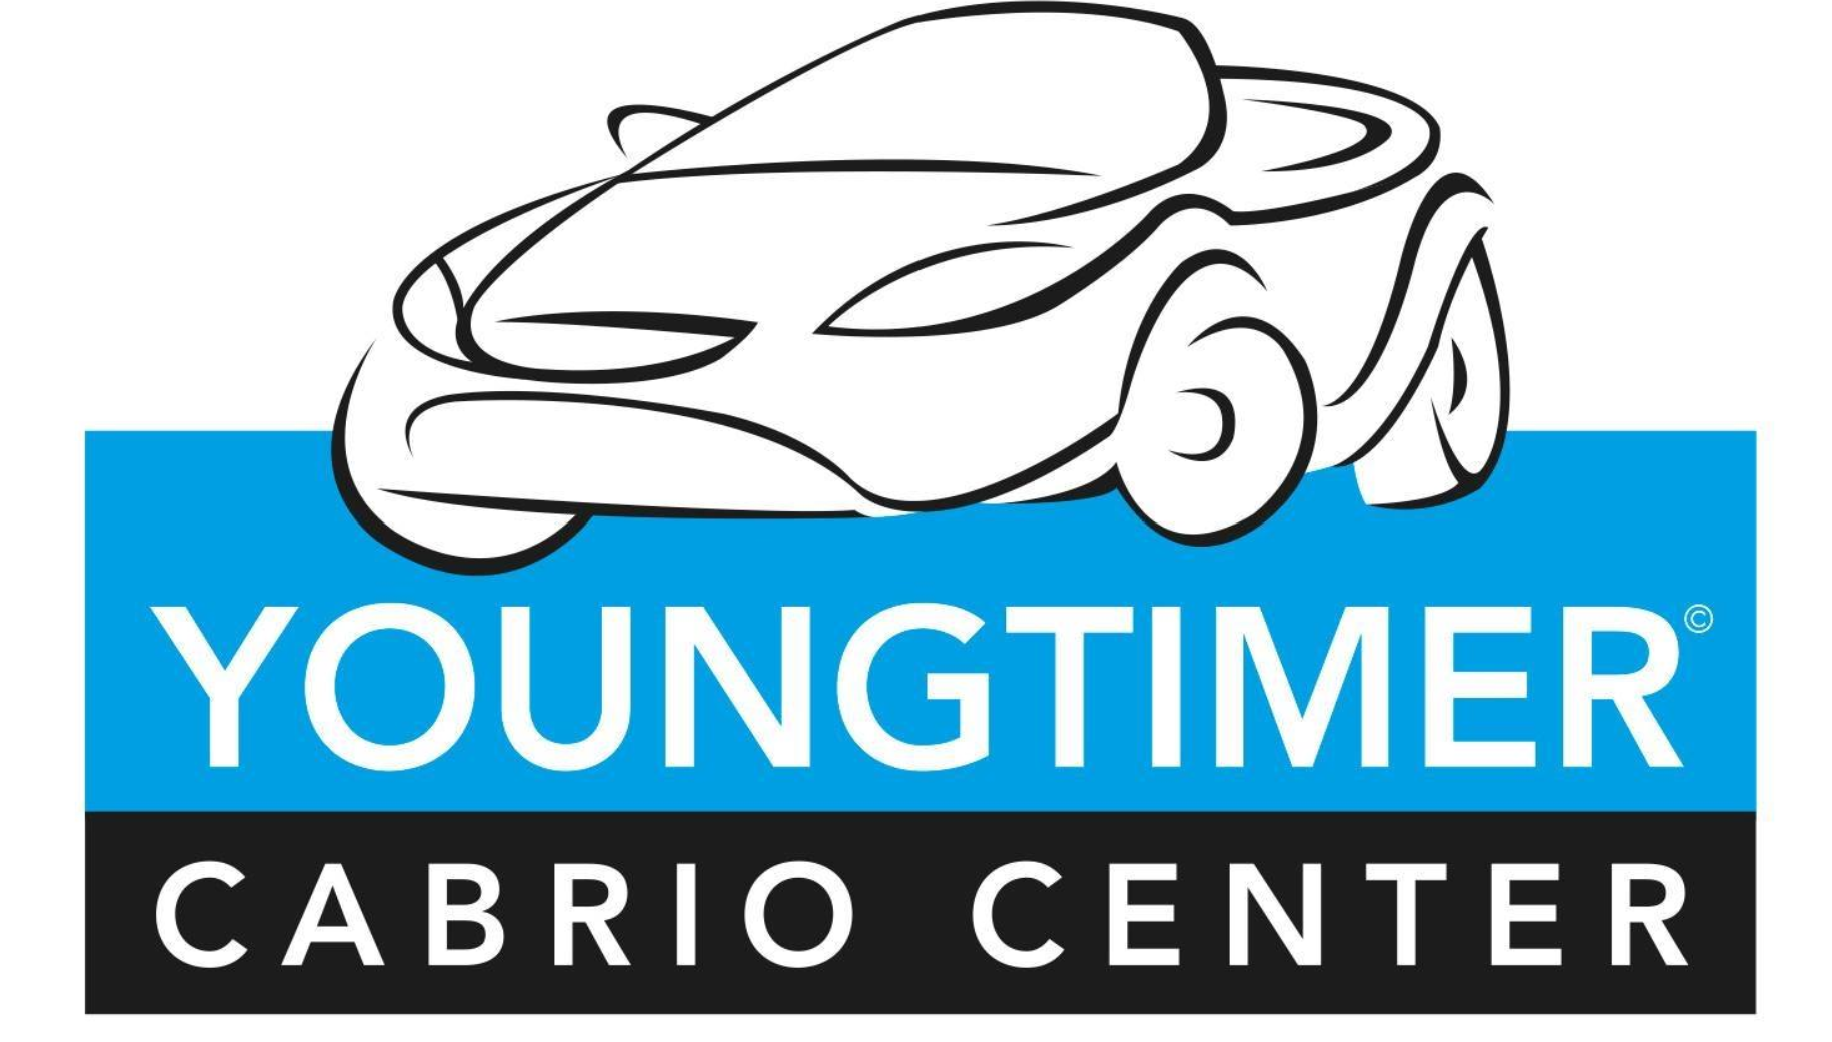 Young Timer Cabrio Center - image